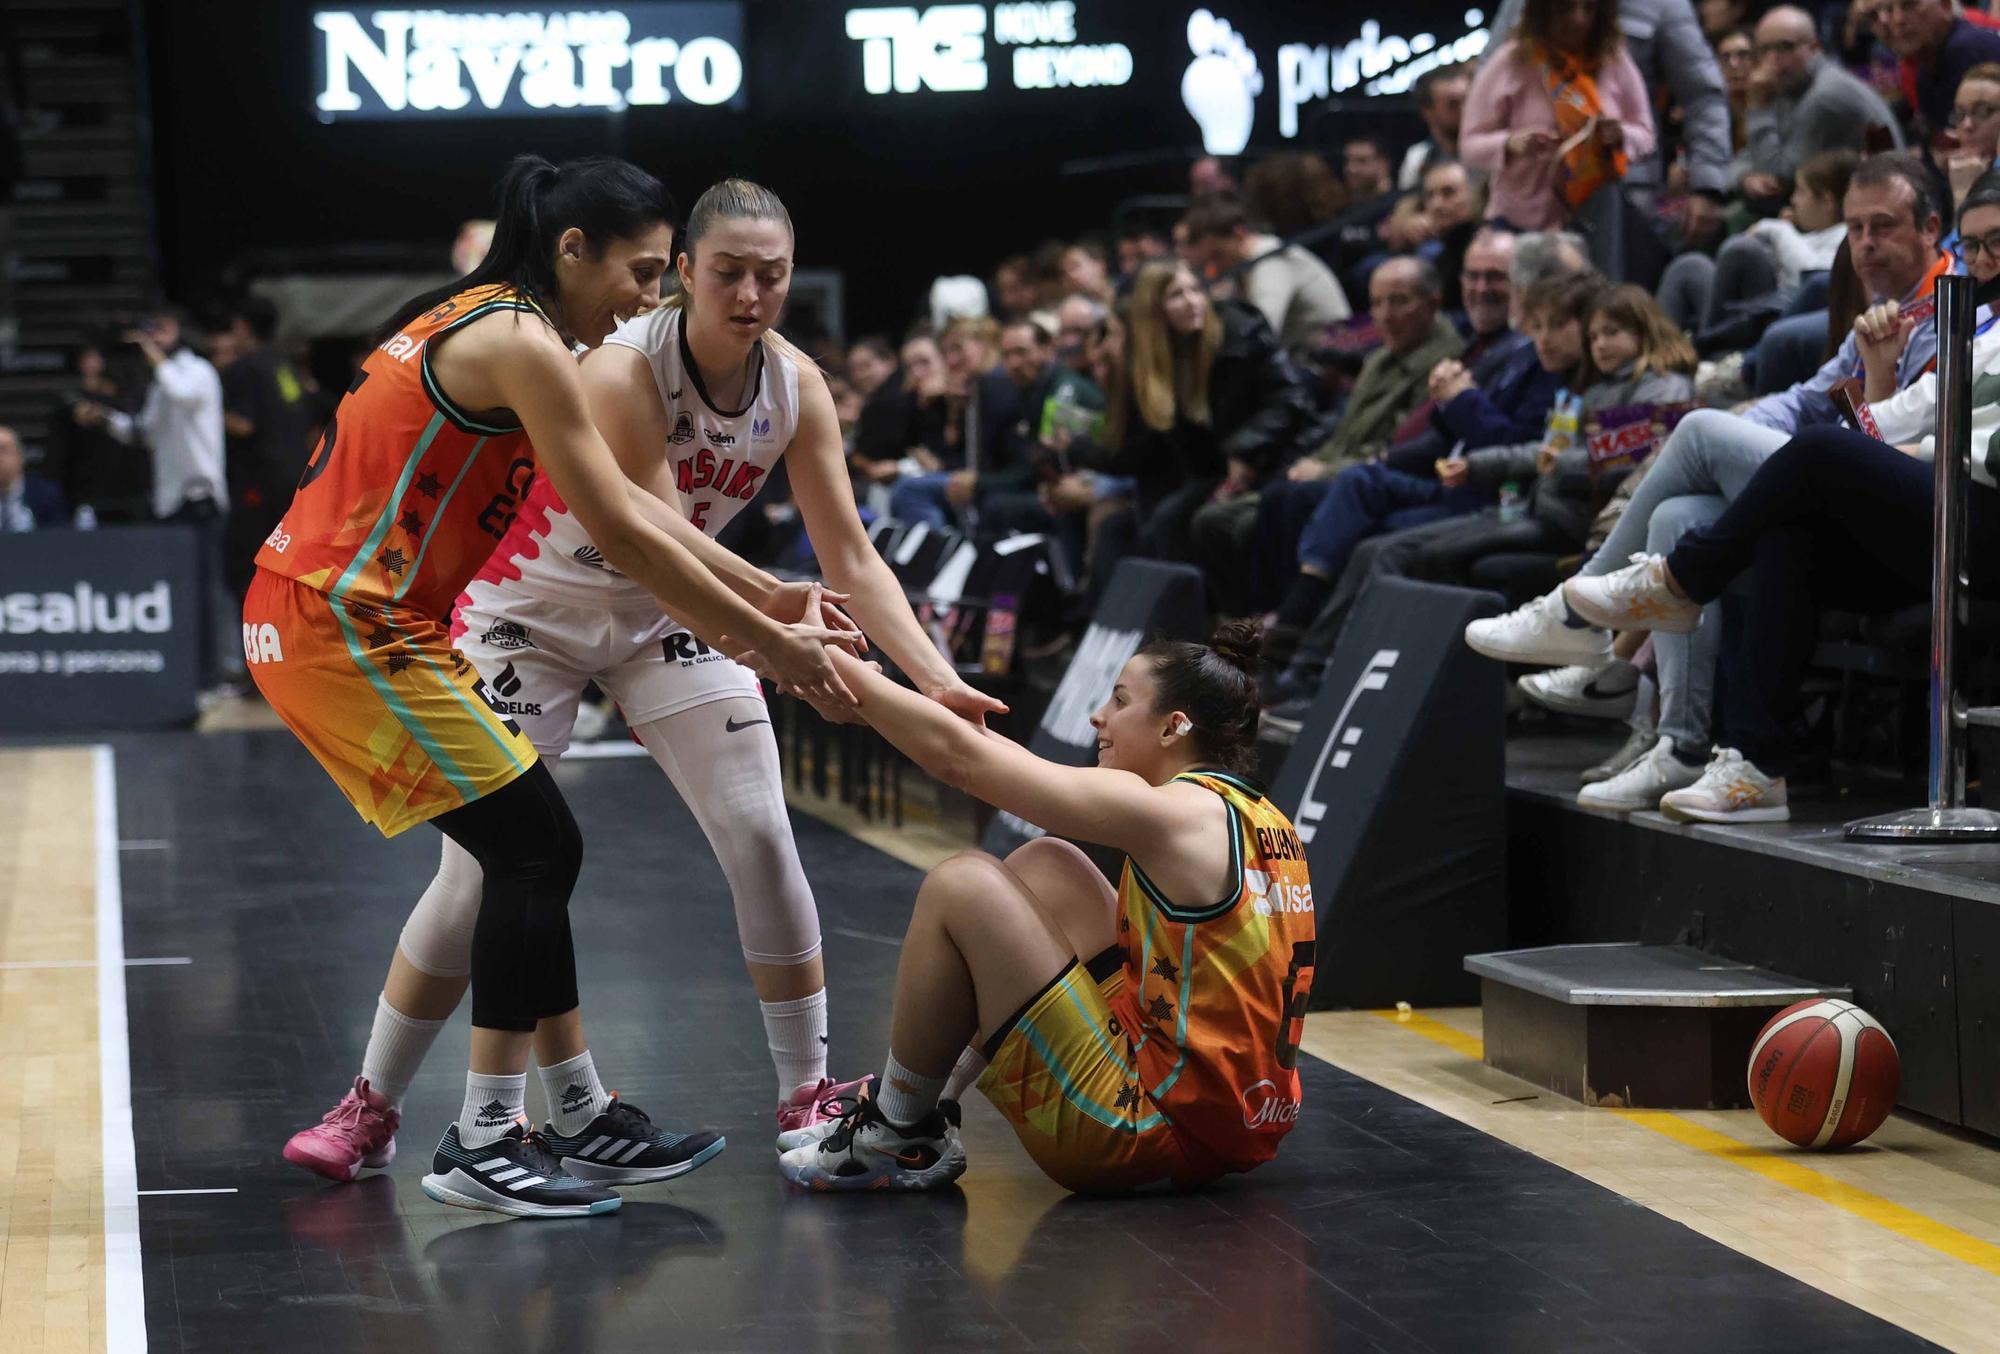 Valencia Basket - DM Ensino Lugo